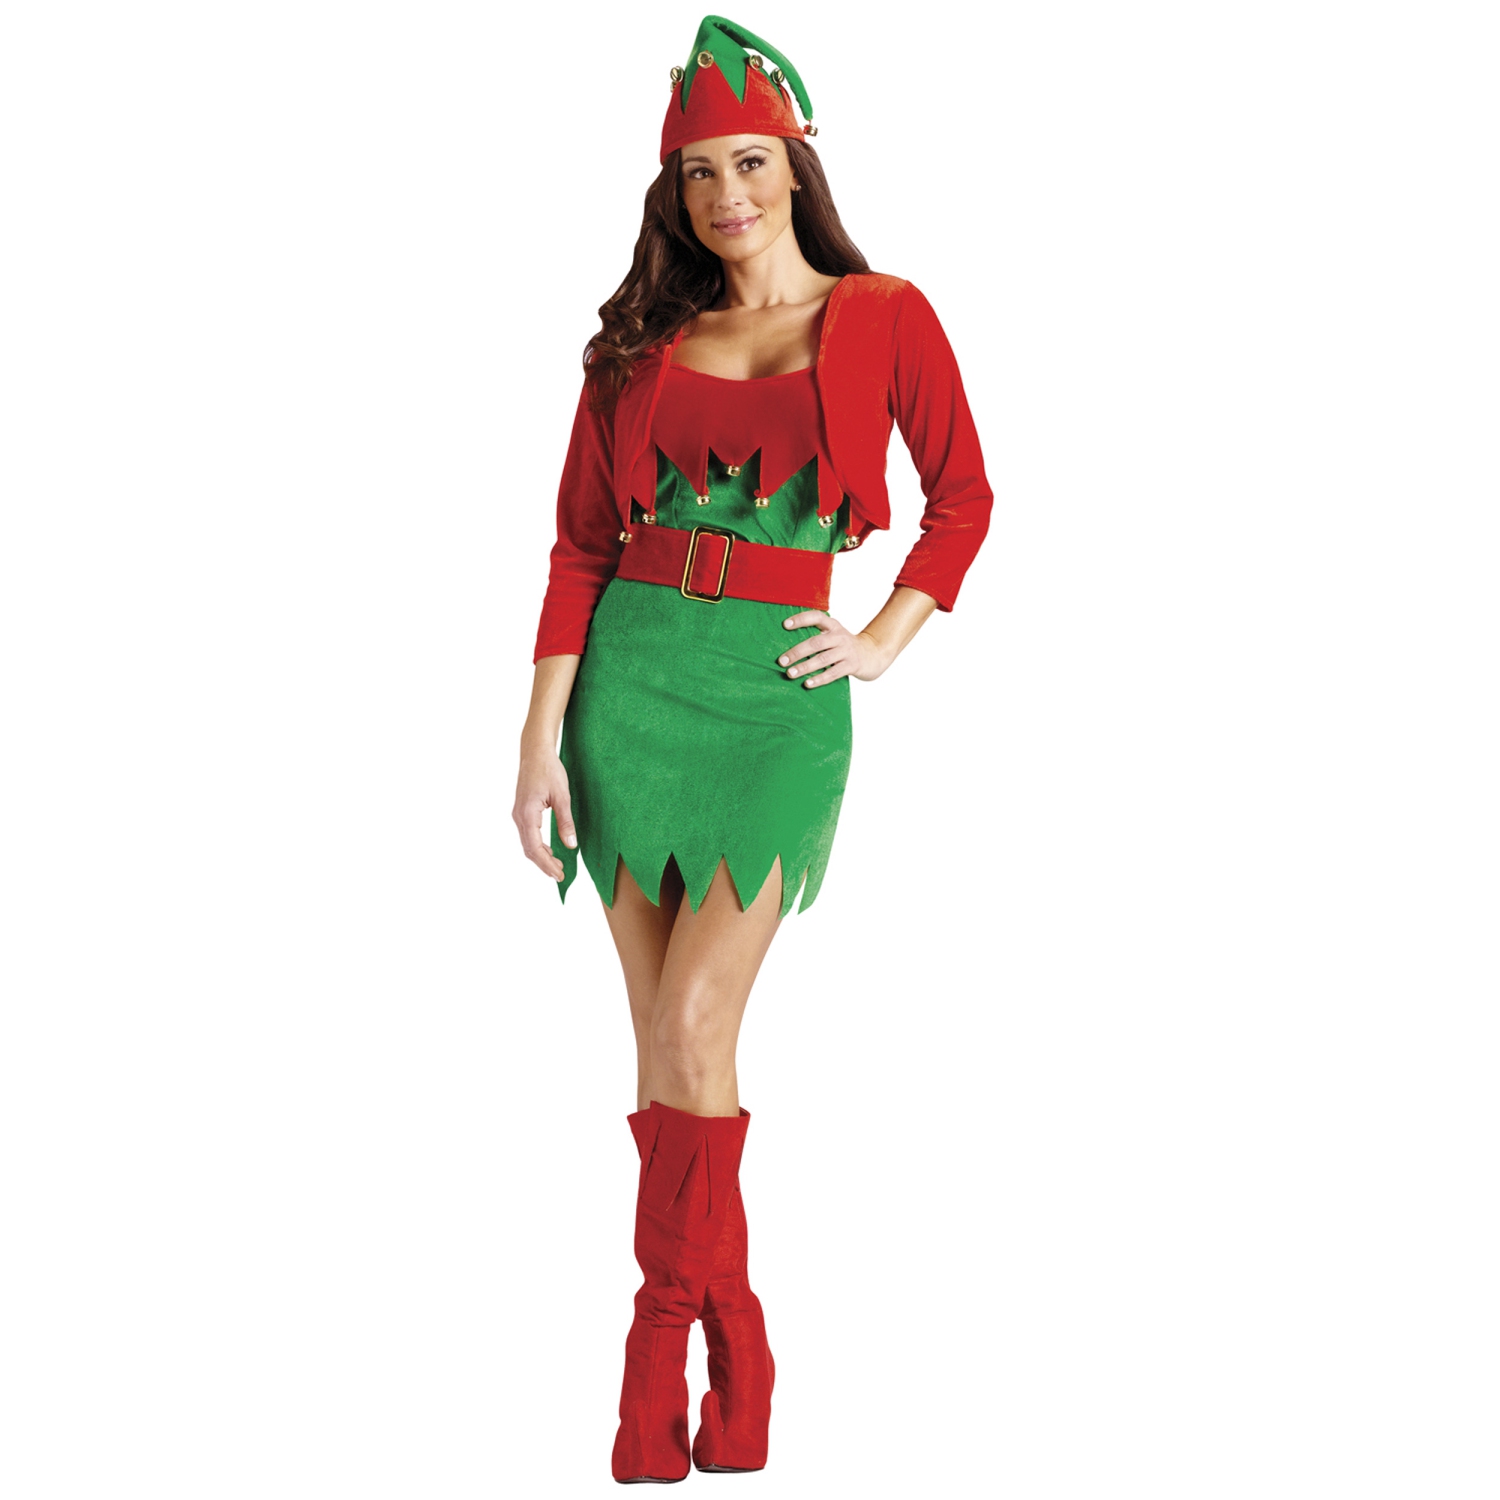 Elfalicious Sexy Elf Christmas Costume - Women's Size Small/Medium (2-8)